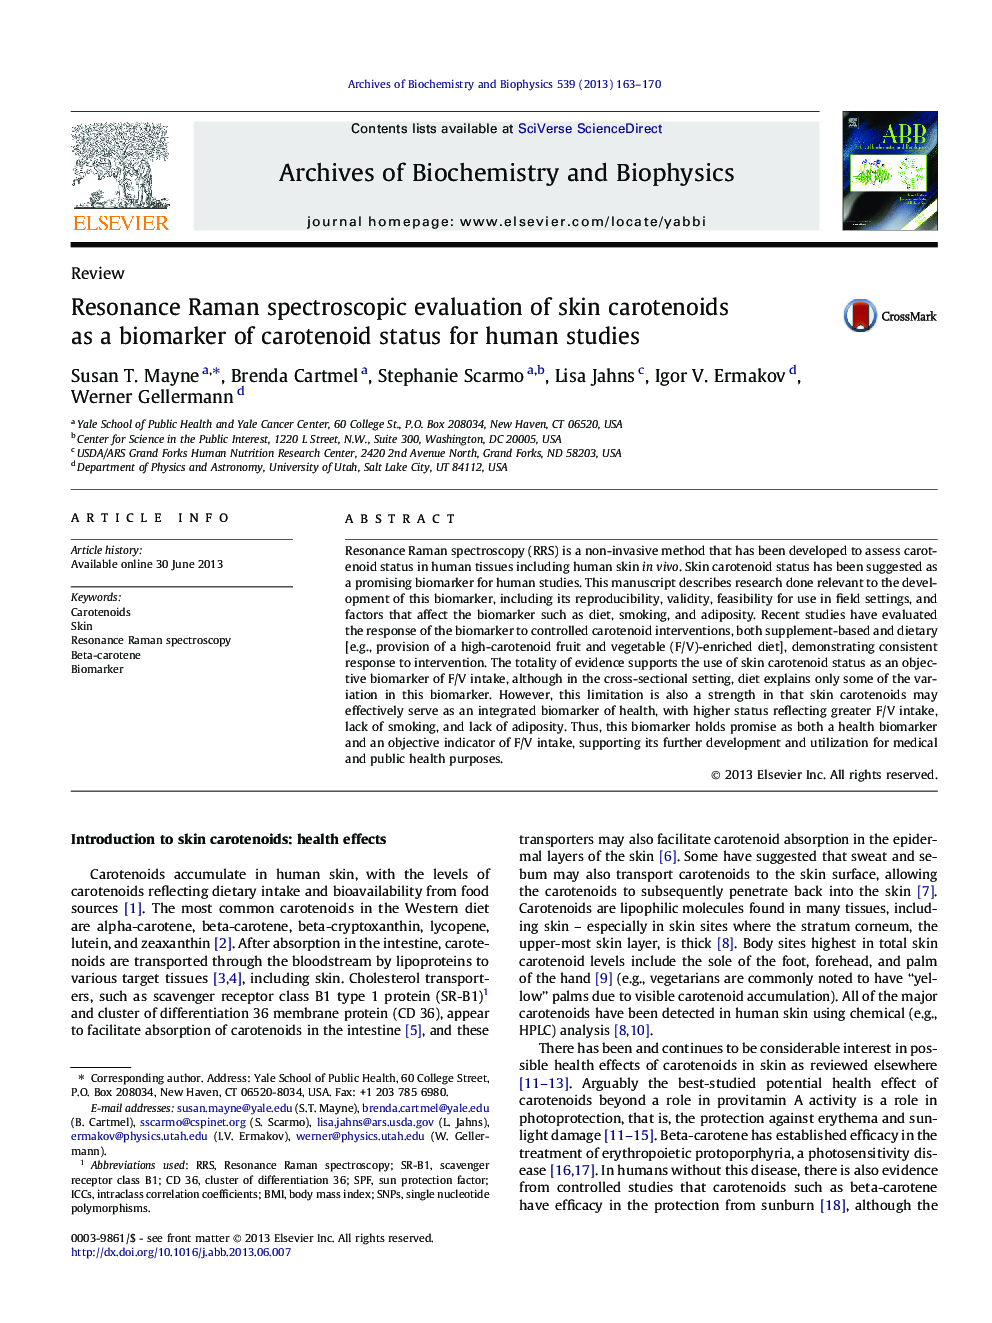 Resonance Raman spectroscopic evaluation of skin carotenoids as a biomarker of carotenoid status for human studies